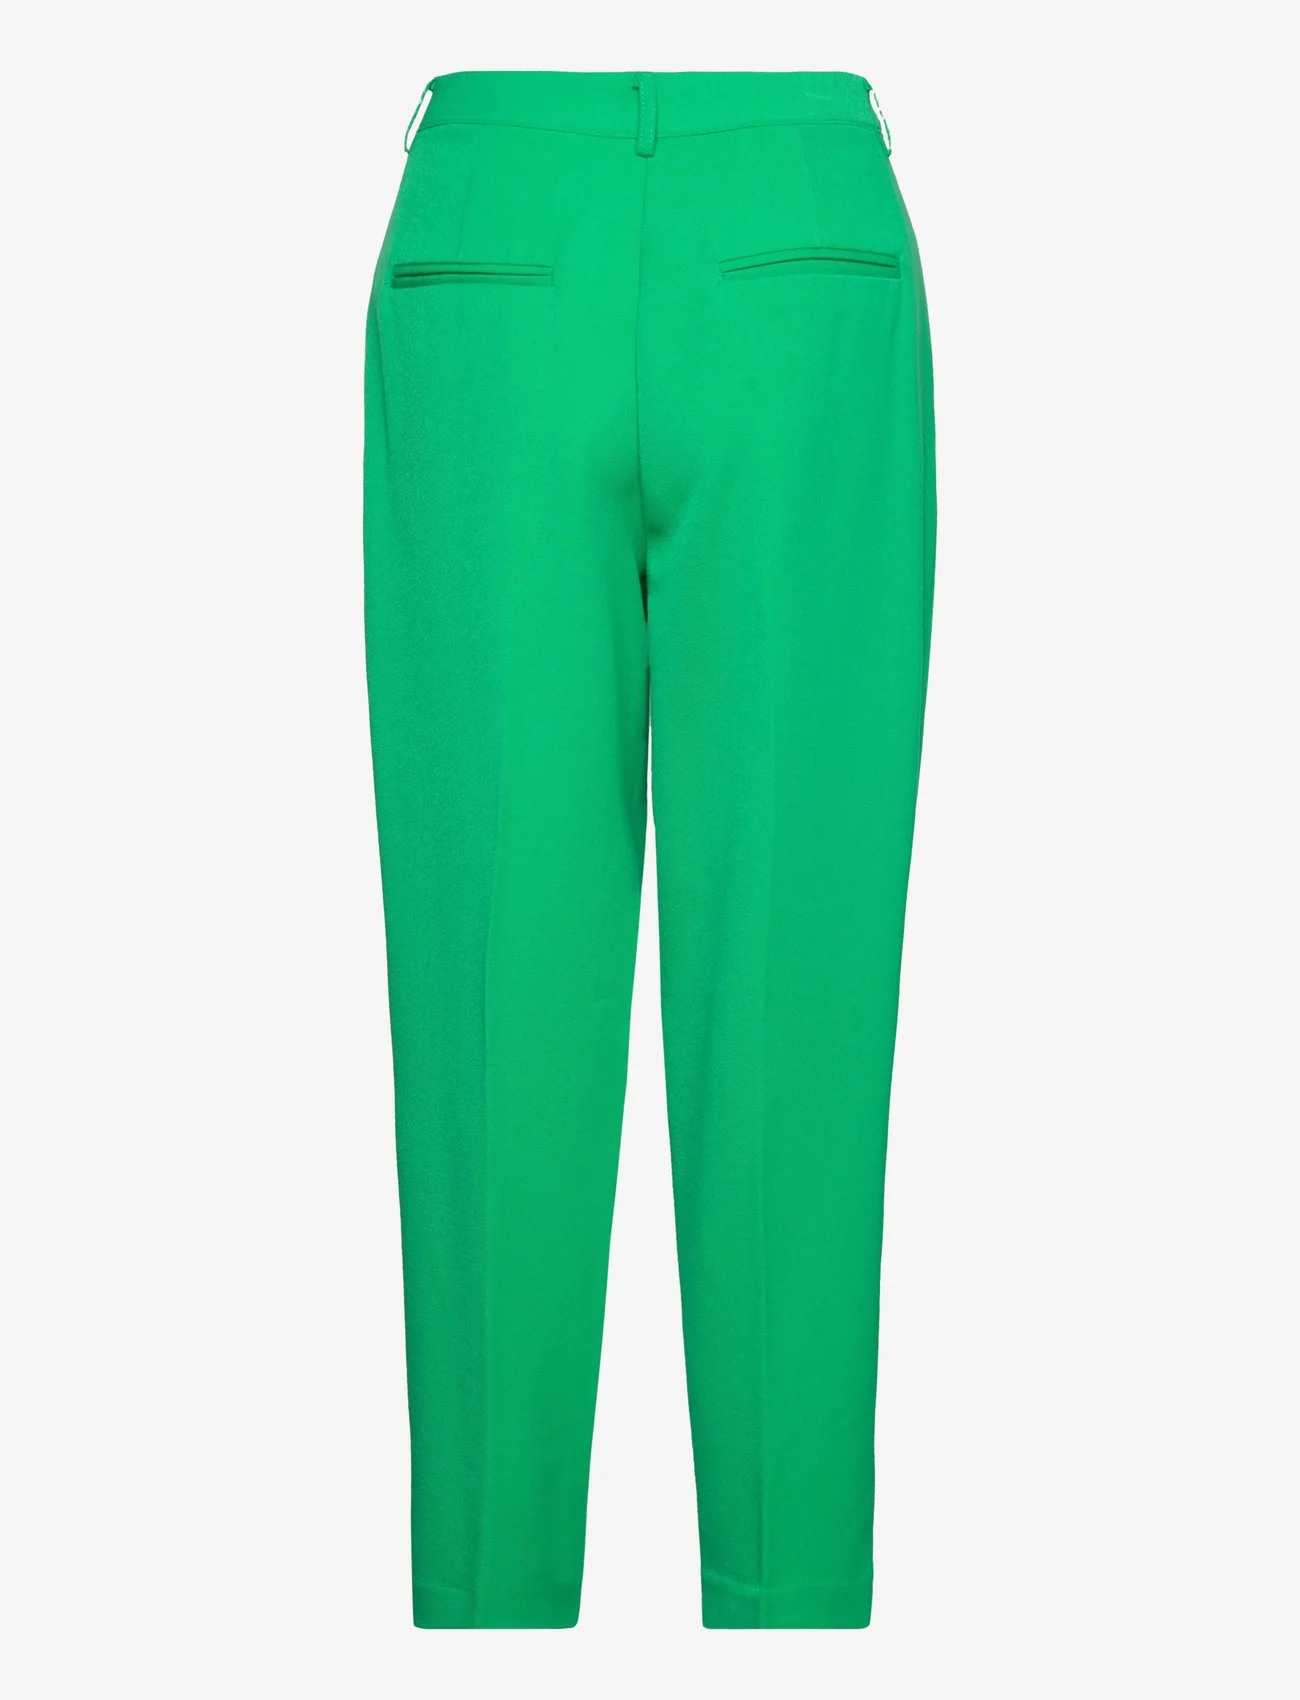 FREE/QUENT - FQKITTY-PANT - tiesaus kirpimo kelnės - bright green - 1